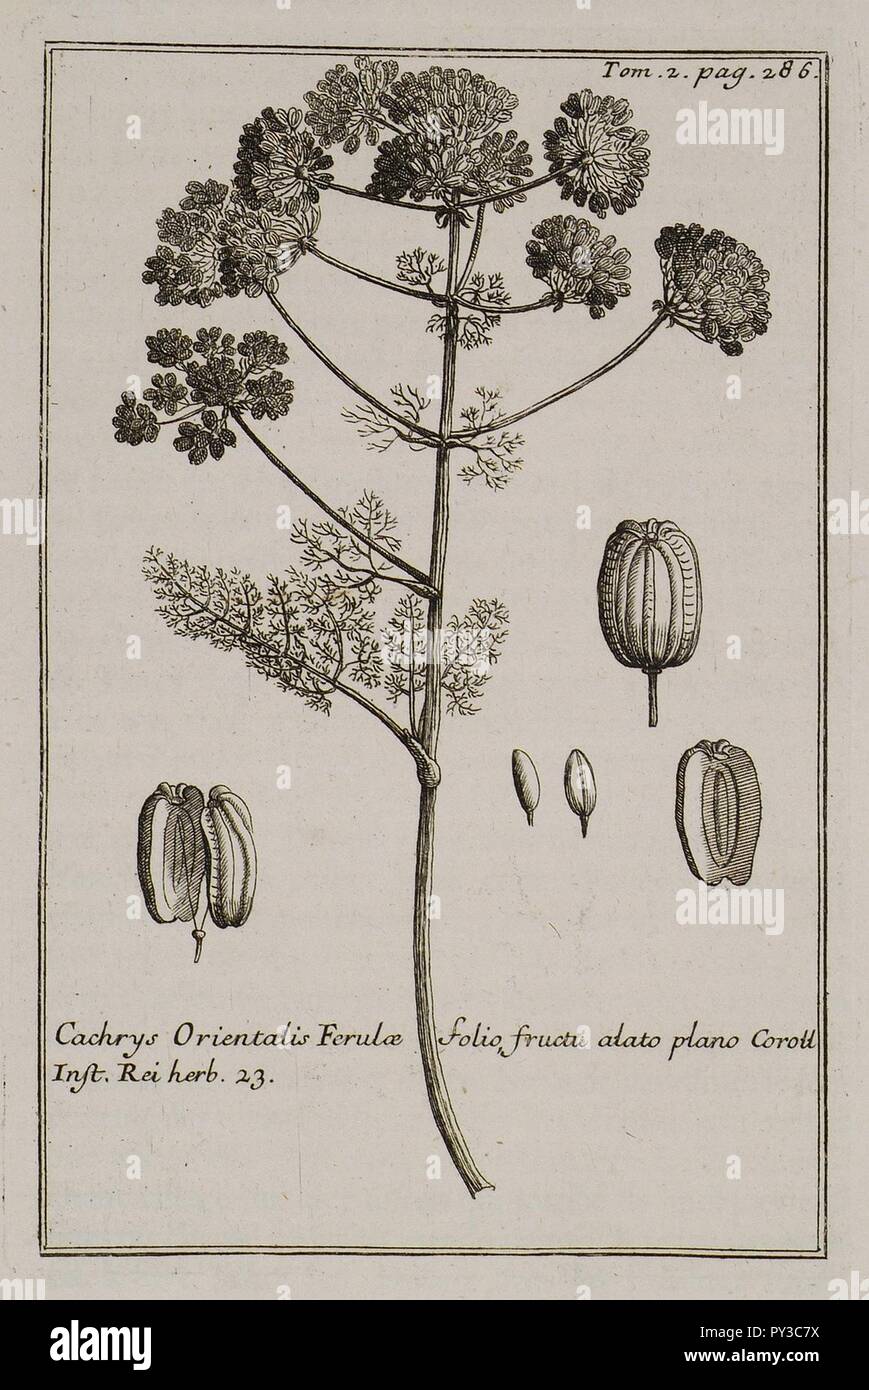 Cachrys Orientalis Ferulae folio fructu atato plano Coroll Inst Rei herb 23 - Tournefort Joseph Pitton De - 1717. Stock Photo